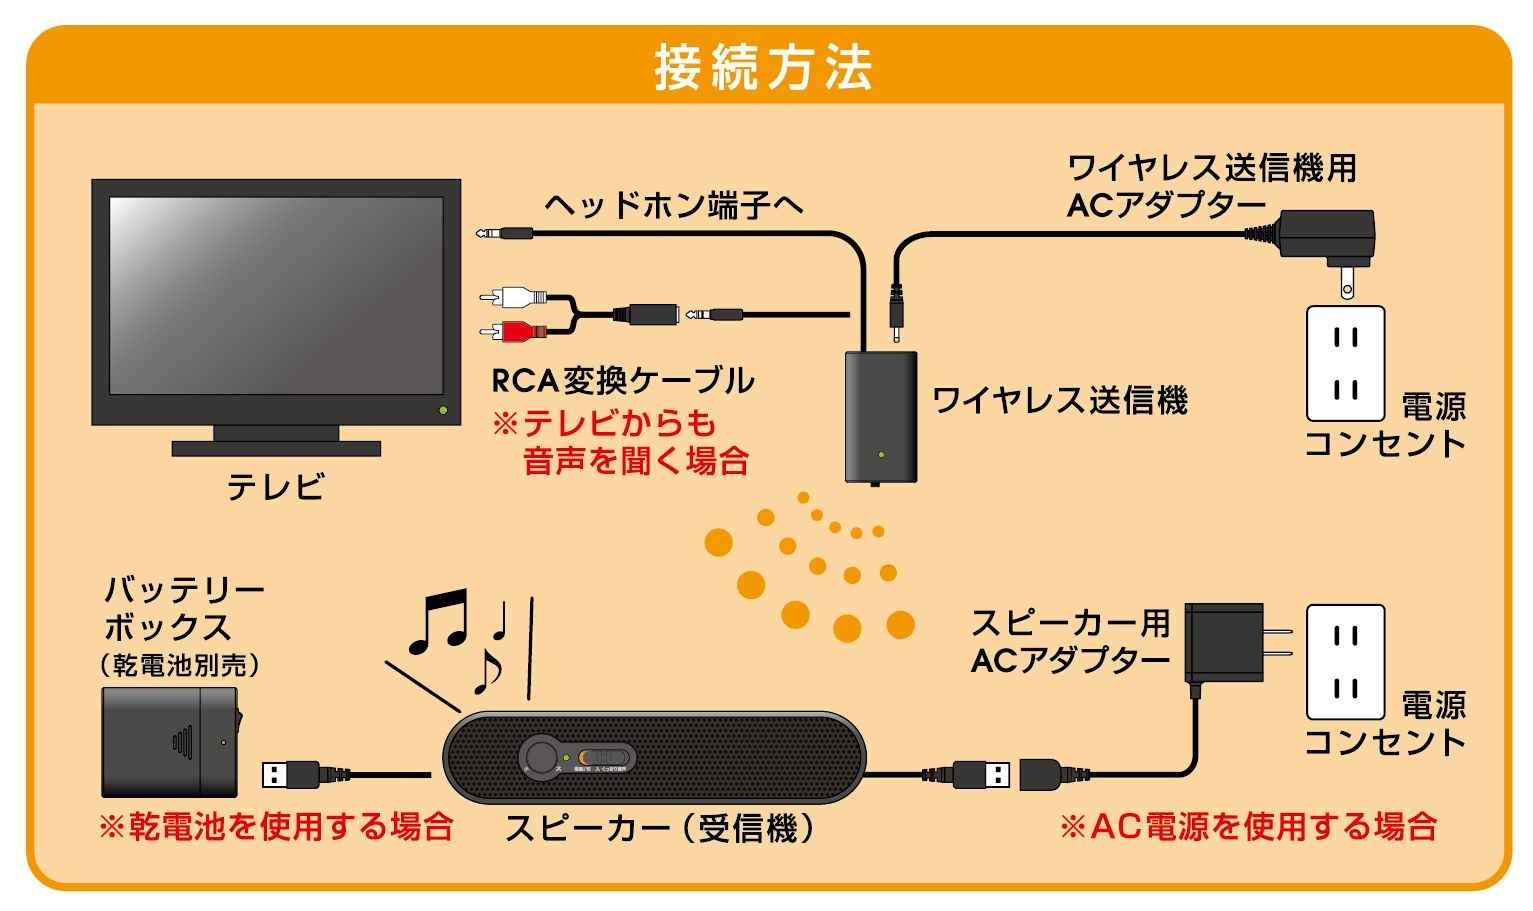 TDK テレビ用手元スピーカー SP-TV24WA-BK [ブラック] 価格比較 - 価格.com